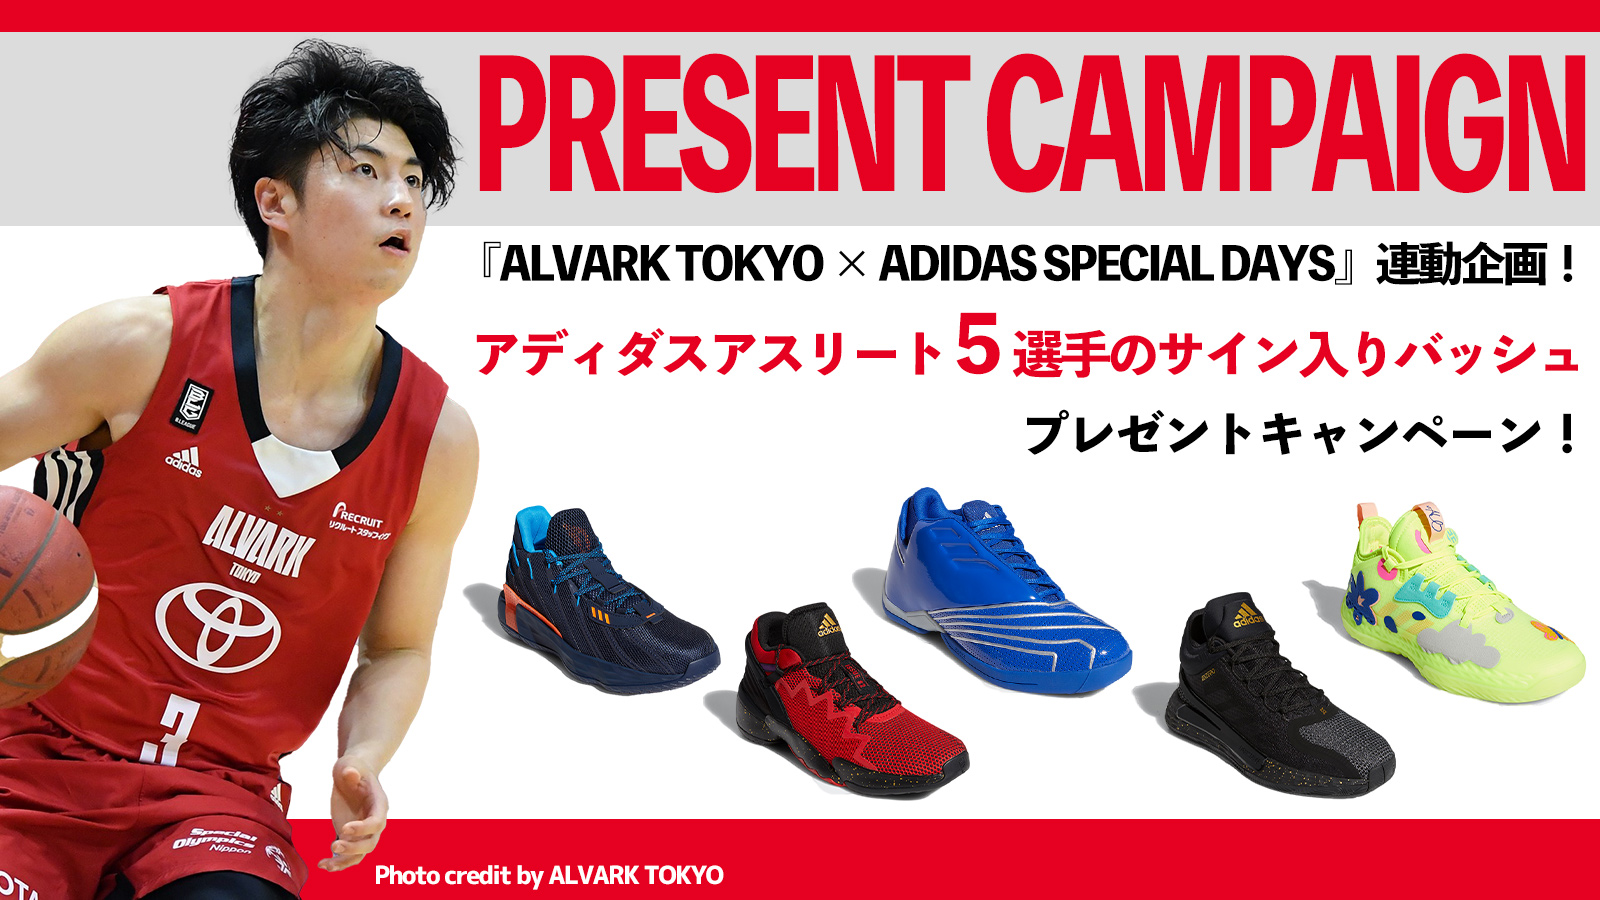 Alvark Tokyo Adidas Special Days 連動 アディダスアスリート5選手サイン入りバッシュプレゼントキャンペーン バスケットボールキング